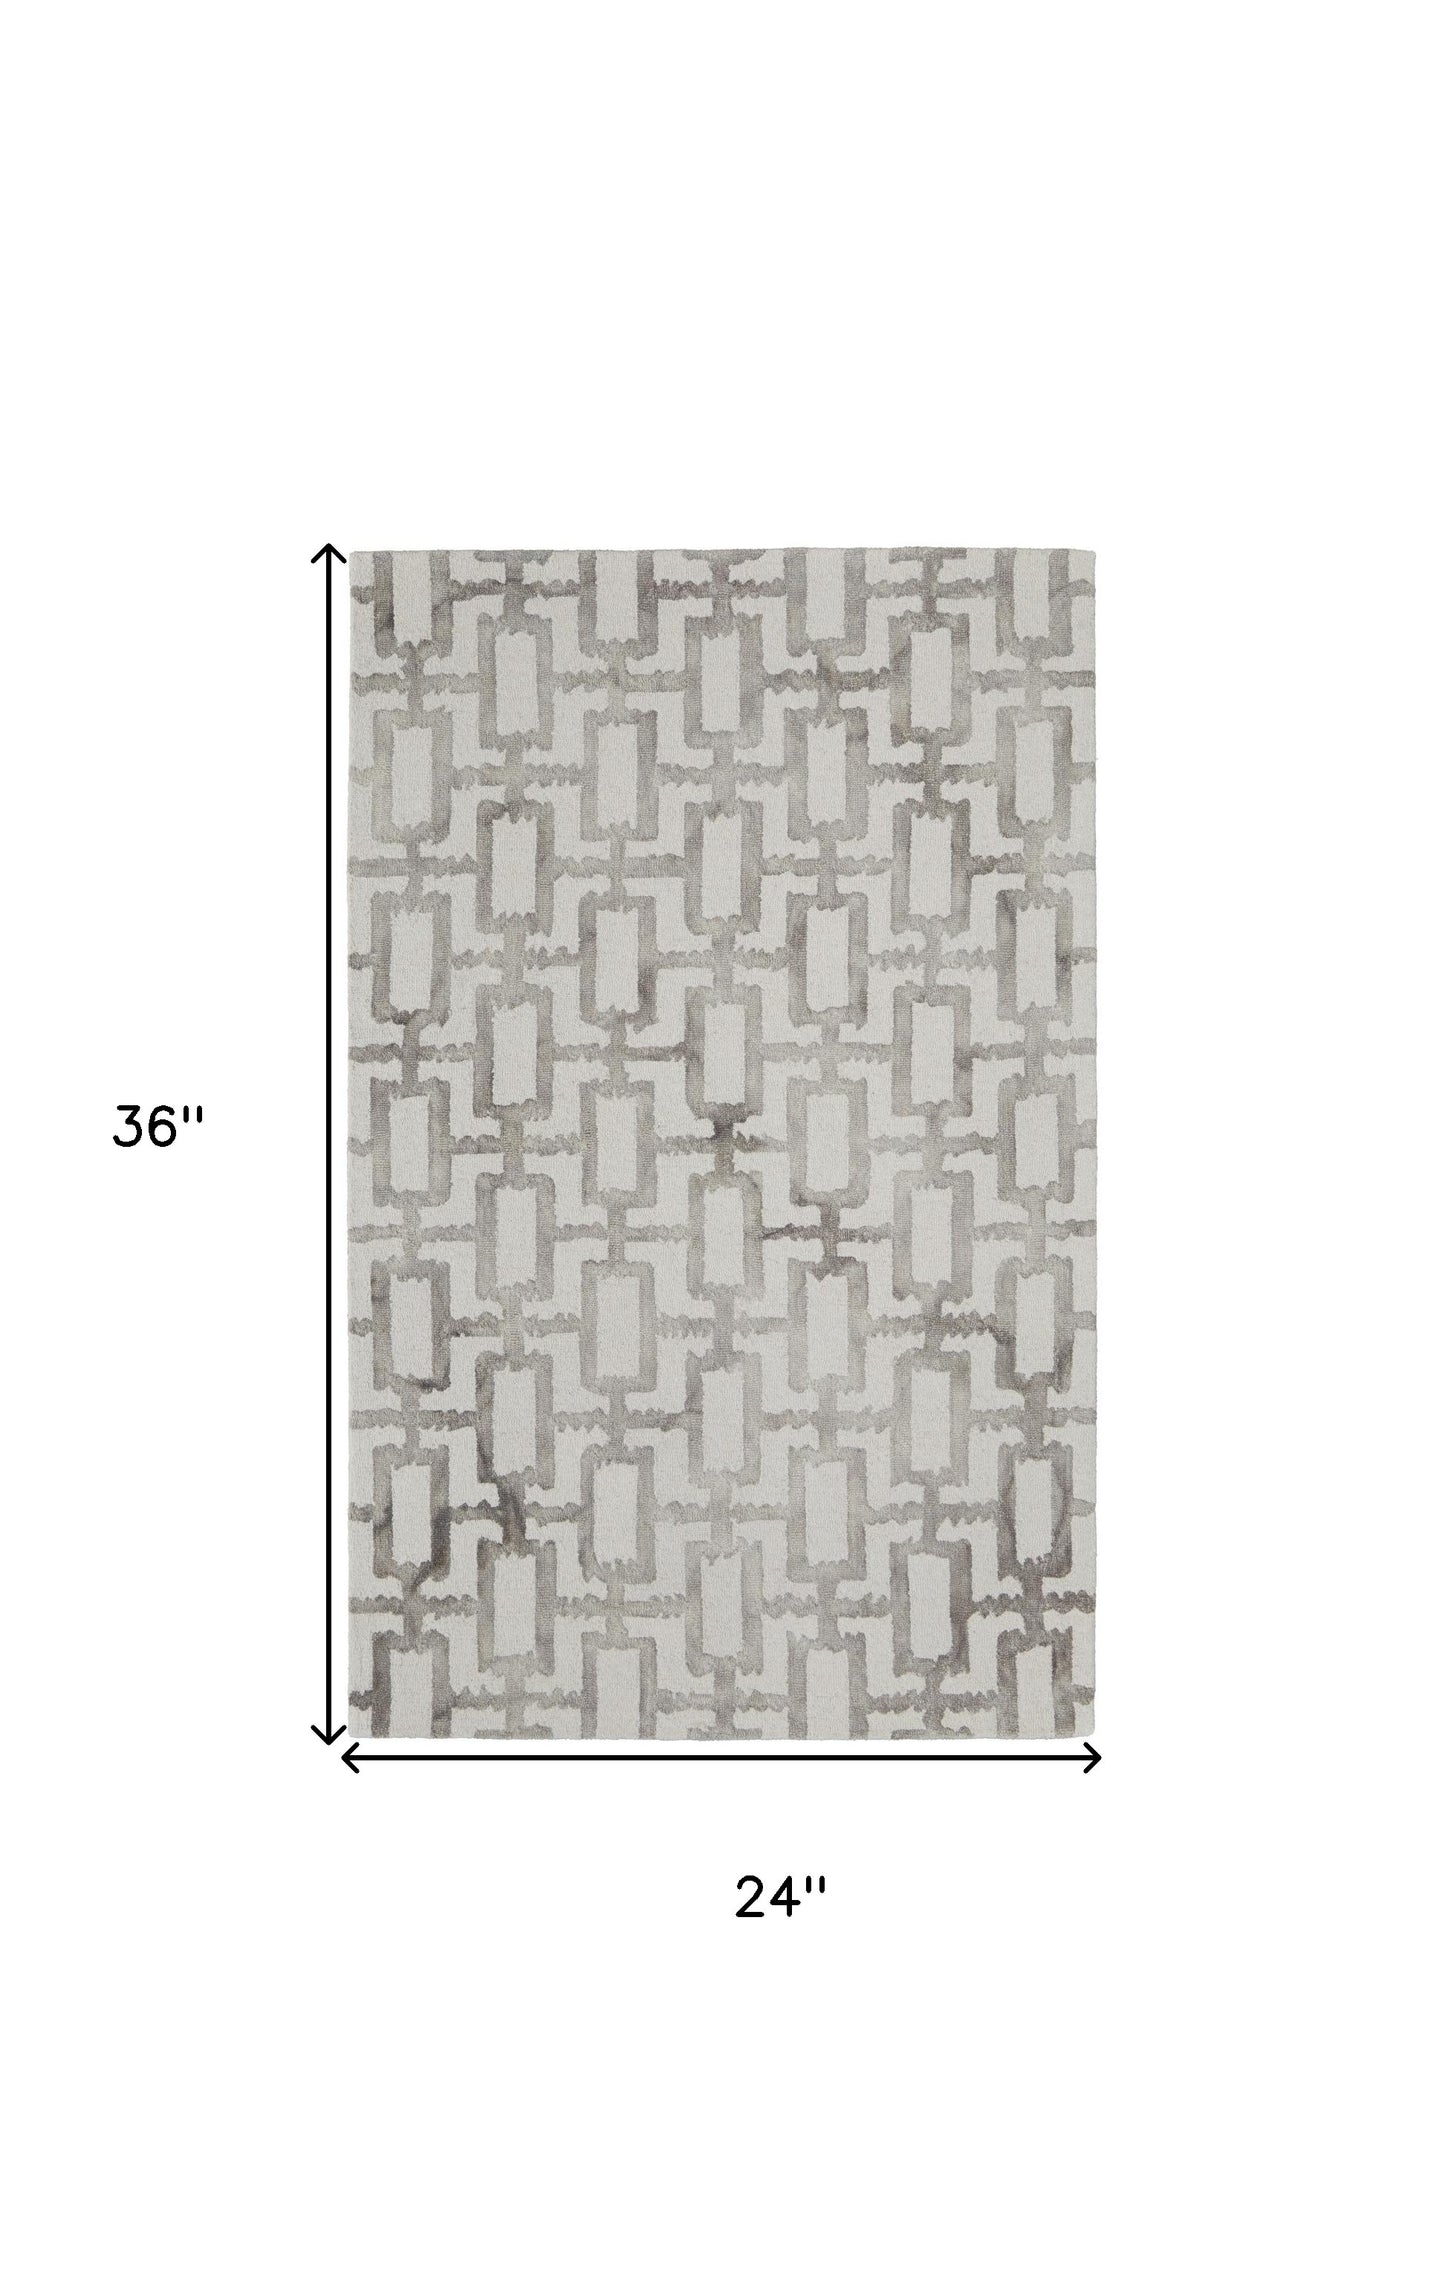 8' X 11' Ivory And Green Wool Geometric Tufted Handmade Area Rug